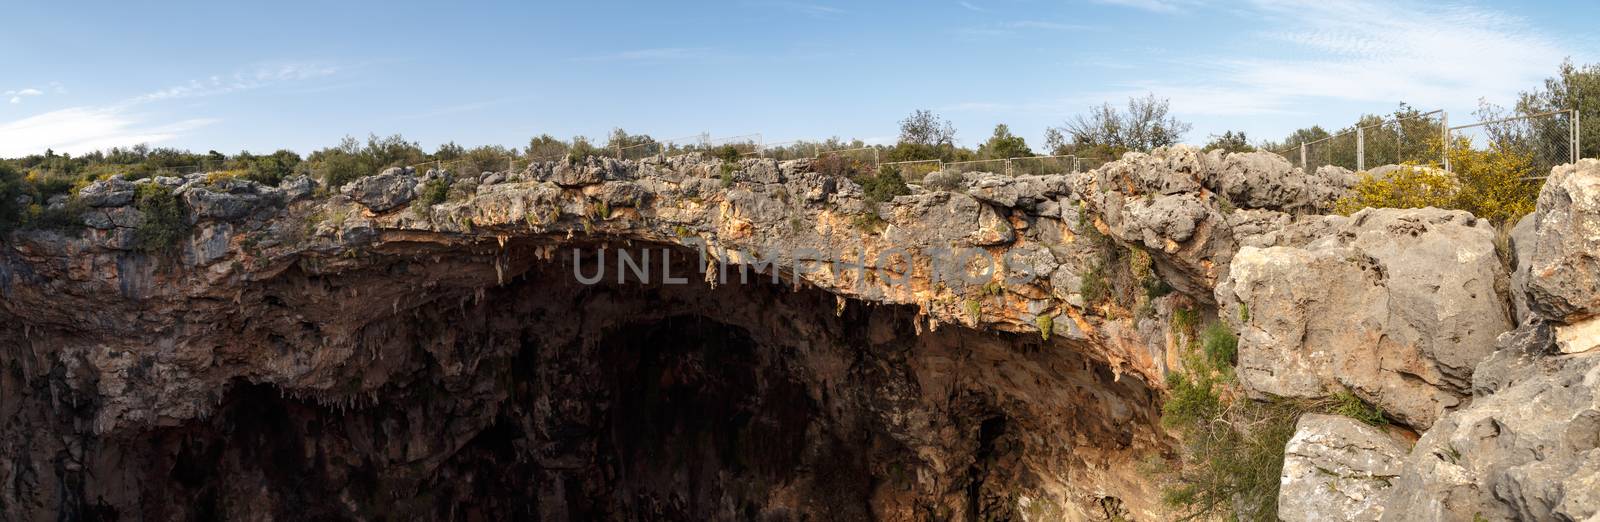 Cennet Cehennem Caves by niglaynike